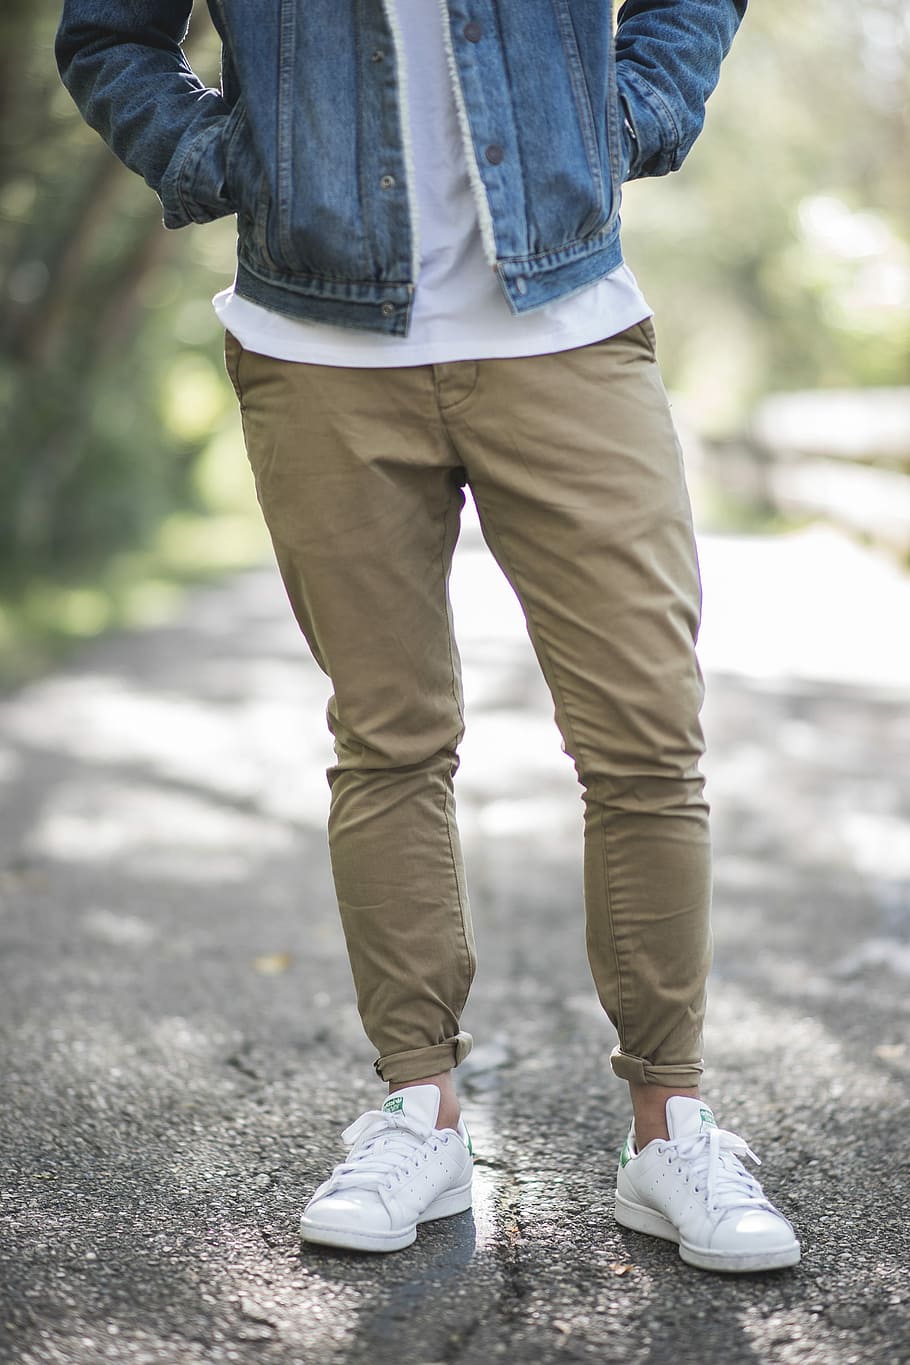 Mongoose Khaki Rinse Slim Fit MidRise Clean Look Stretchable Denim Jeans